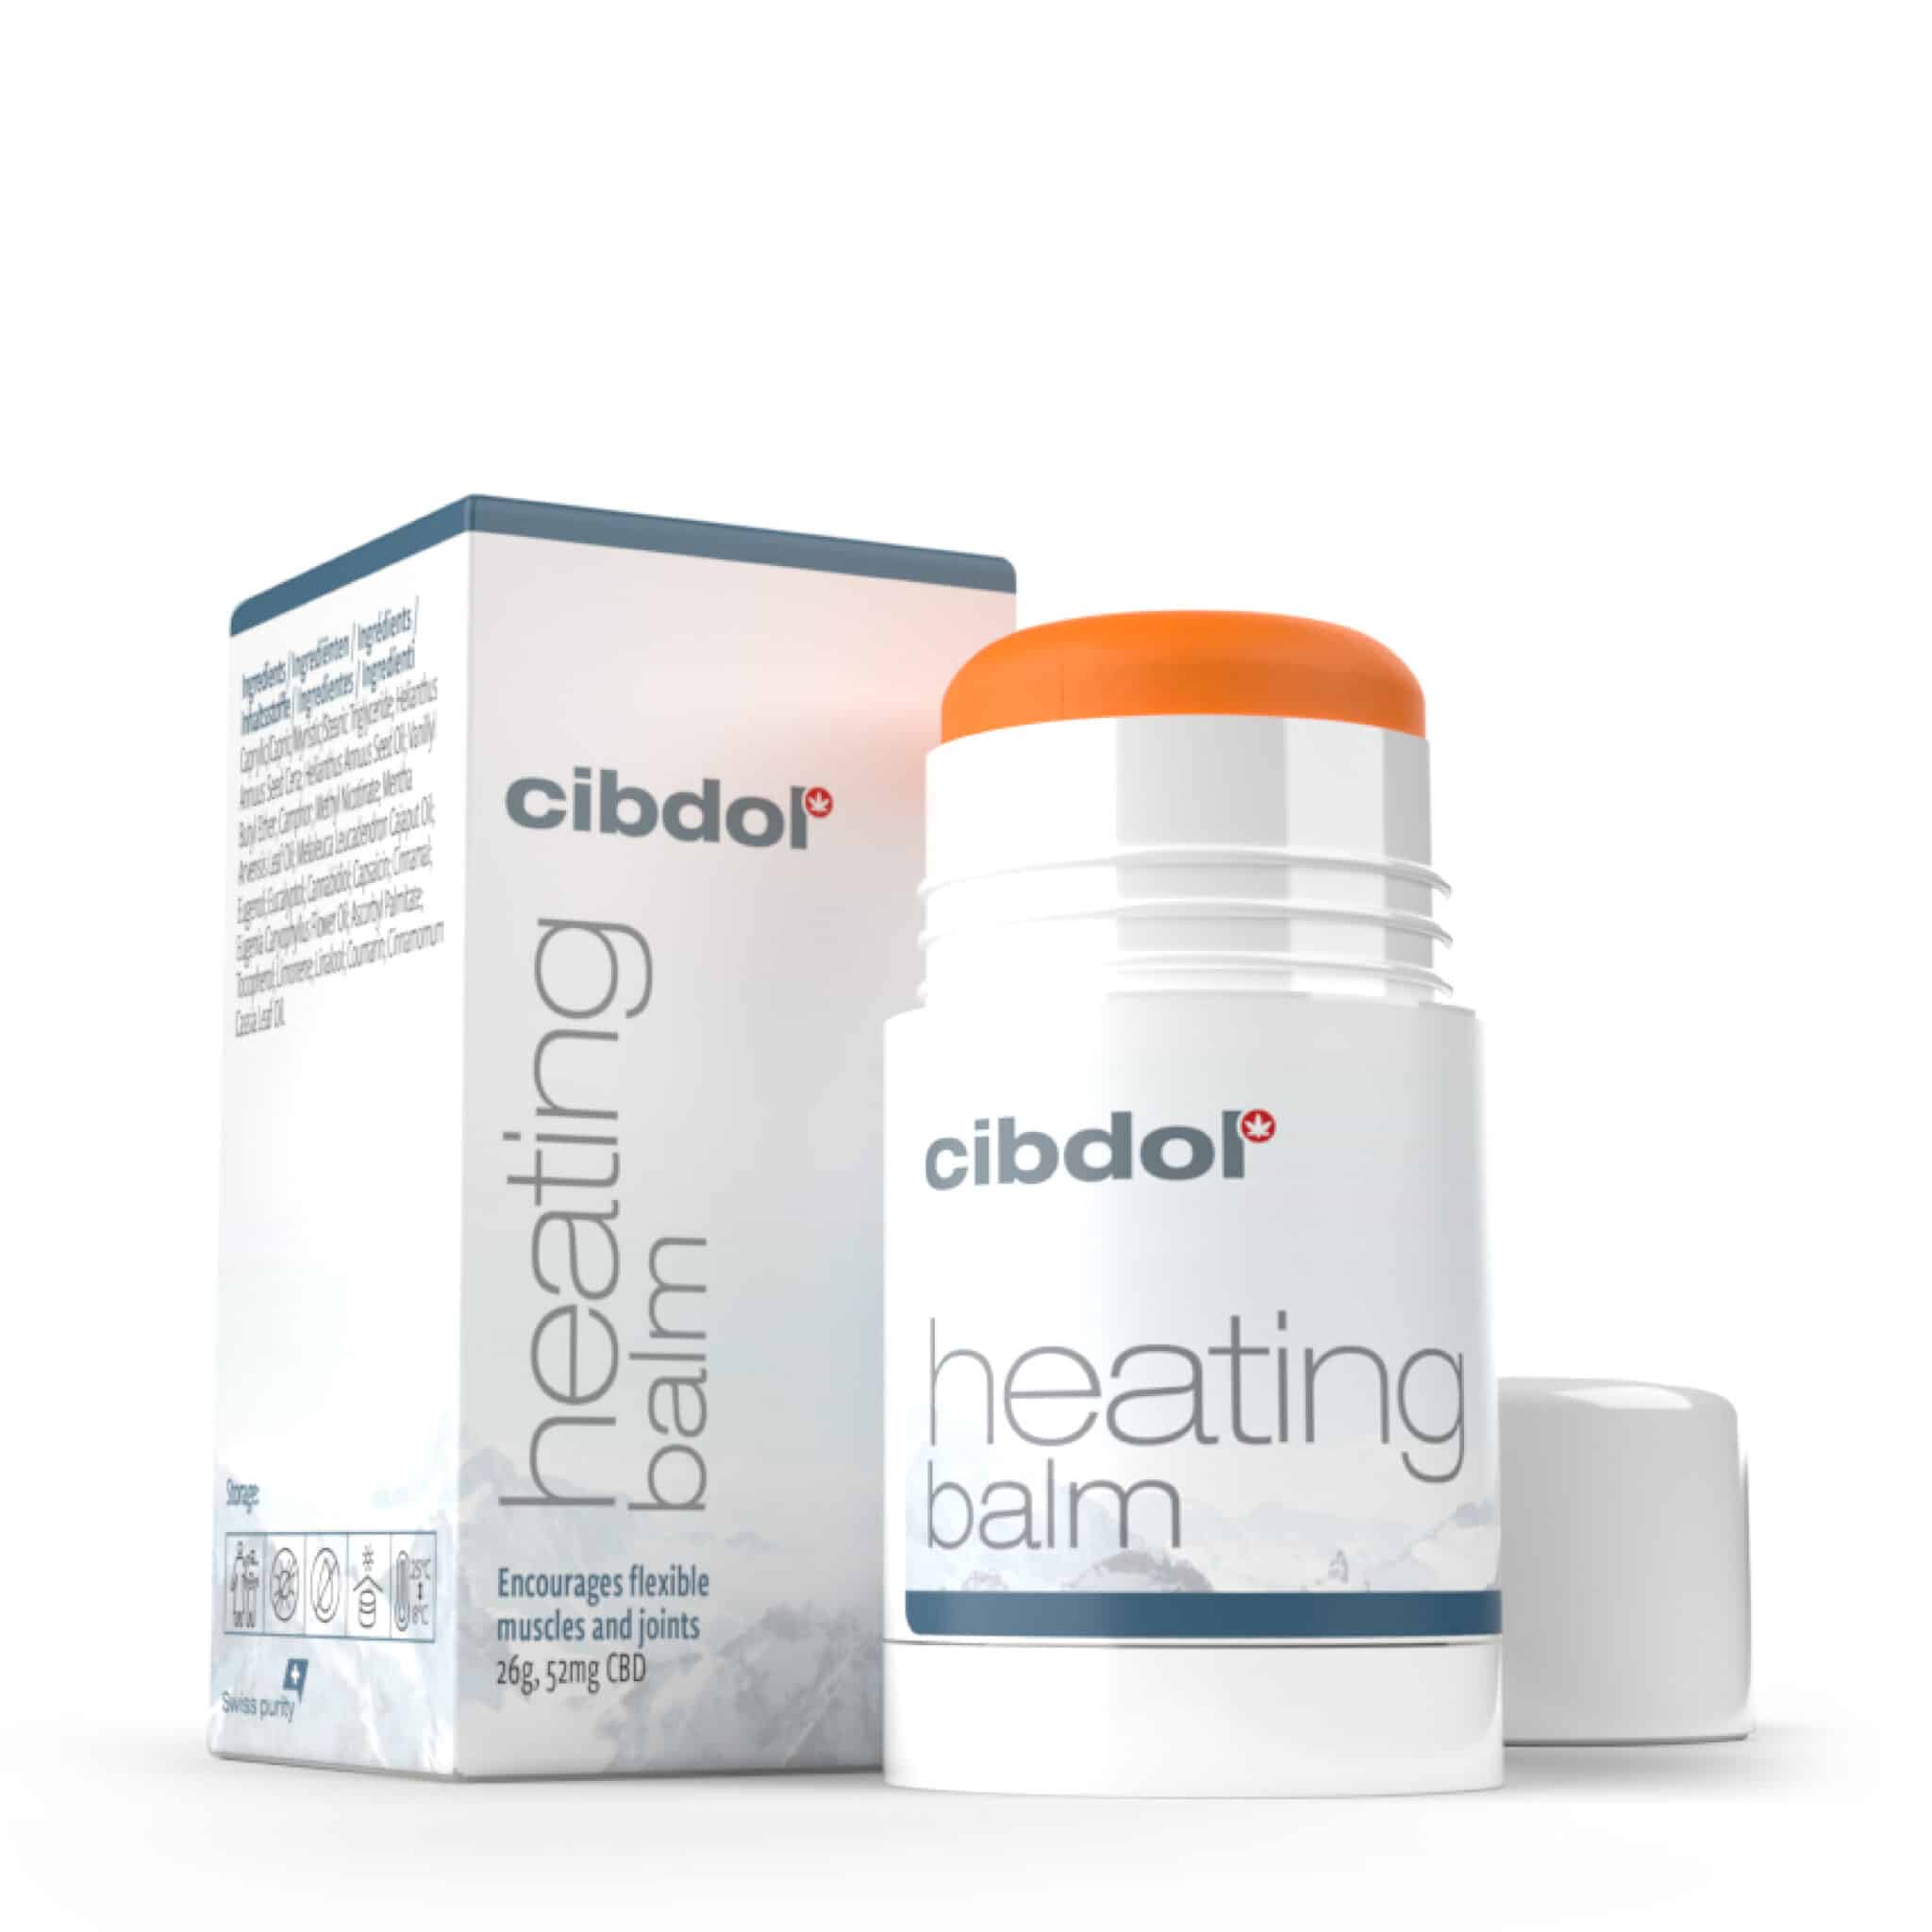 a bottle of Cibdol next to a box of Cibdol - CBD Heating muscle balm.